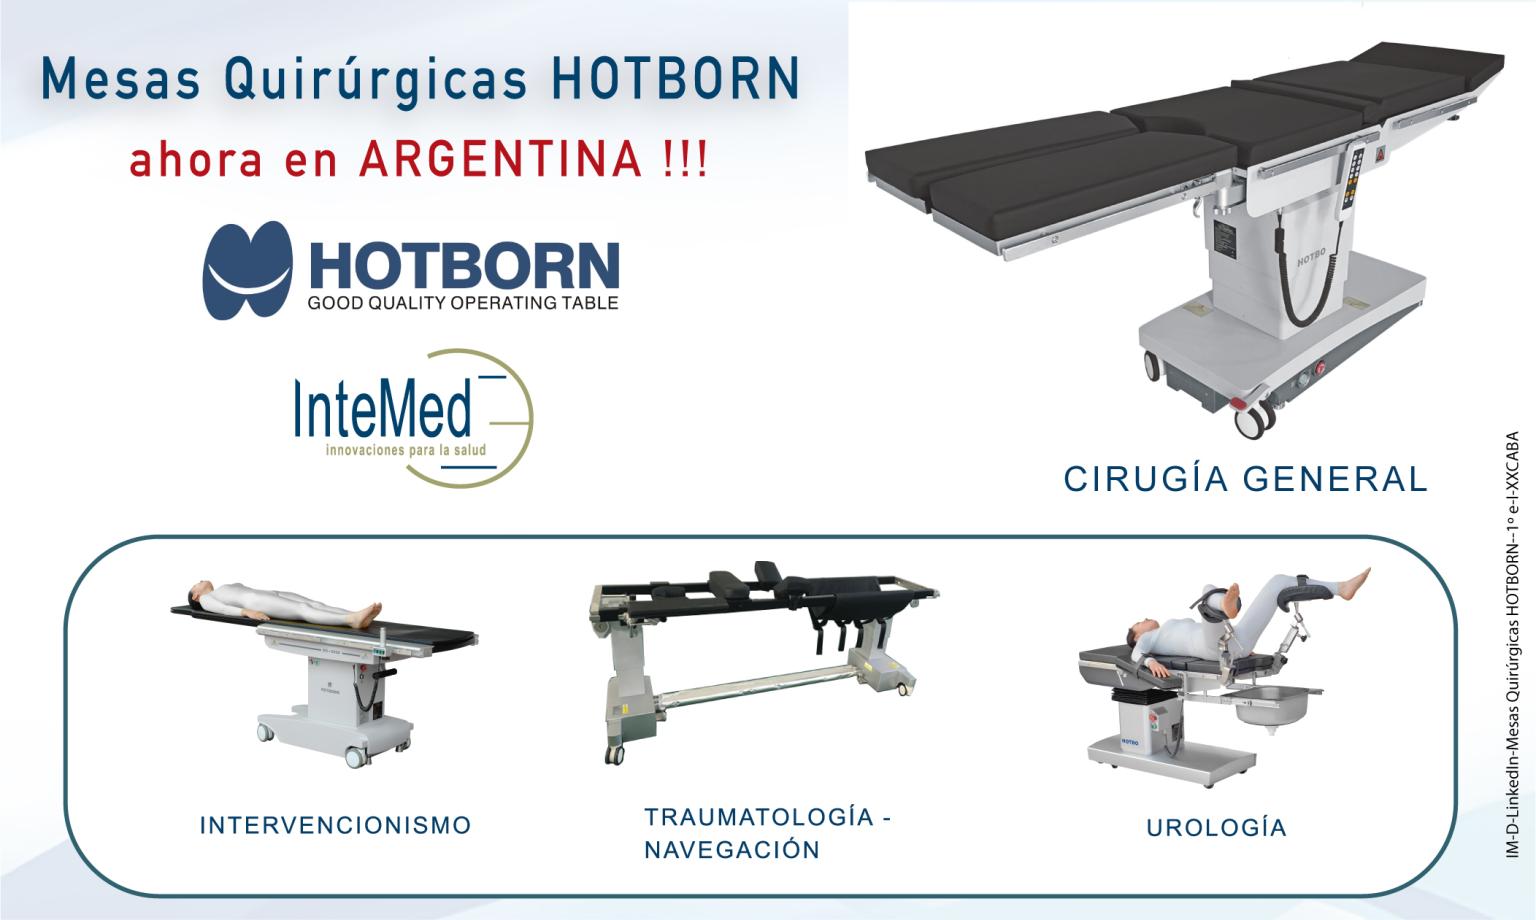 Mesas Quirúrgicas HOTBORN ahora en Argentina! Partner de InteMed SA.